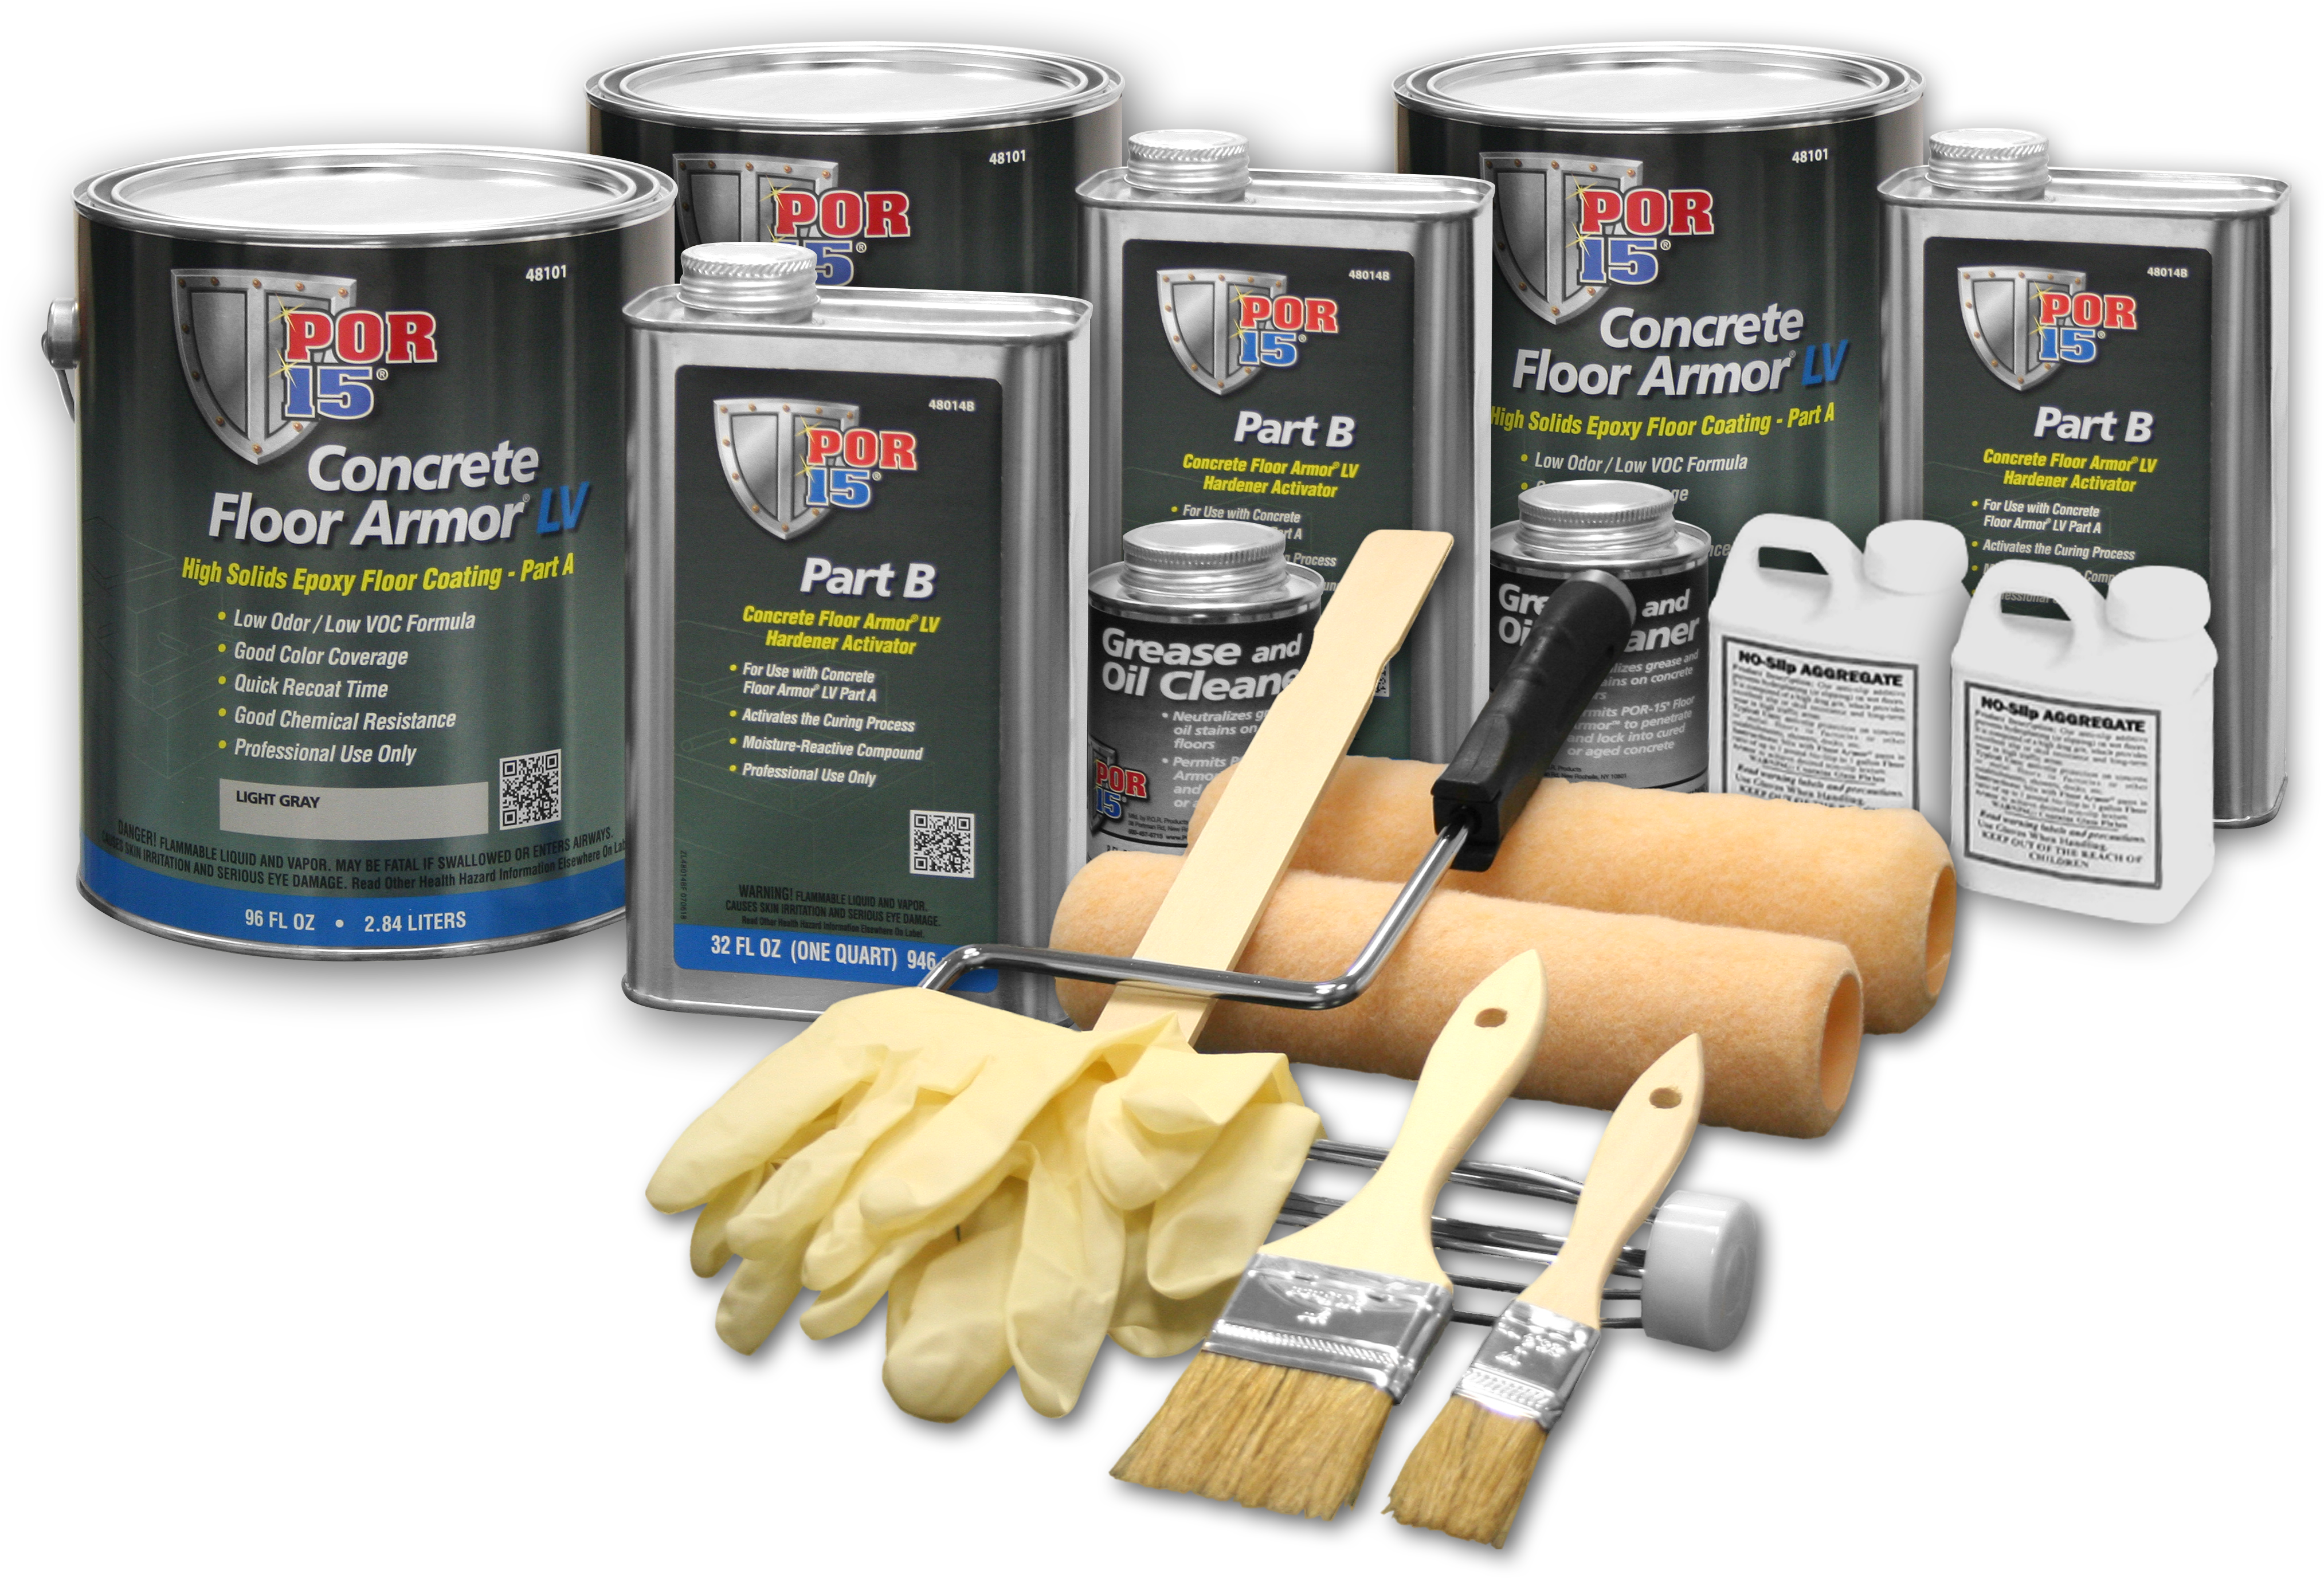 48119 Por 15 Concrete Floor Armor Lv Basic Kit Light - Junk Food Clipart (4179x2855), Png Download